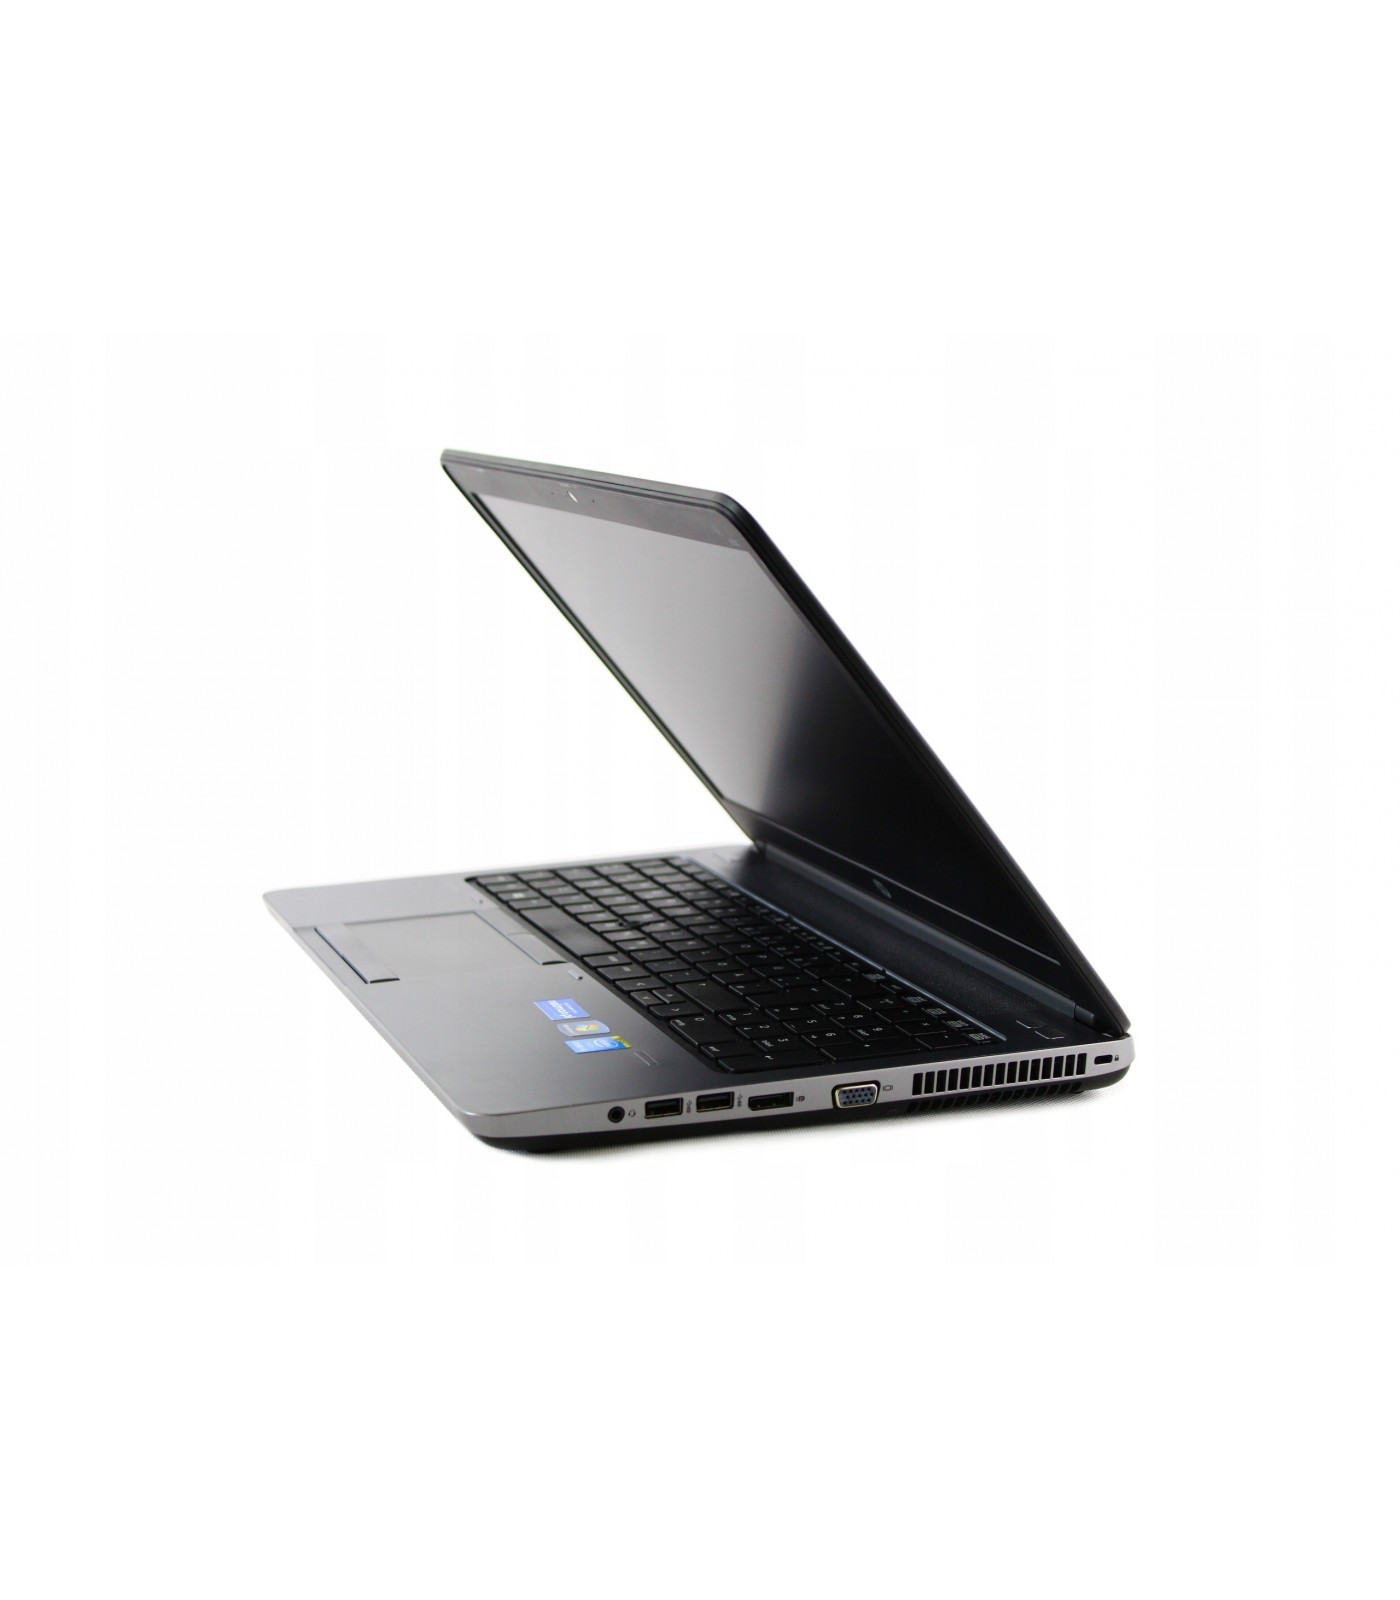 Poleasingowy laptop HP ProBook 650 G1 z Intel Core i3-4000M w Klasie A.